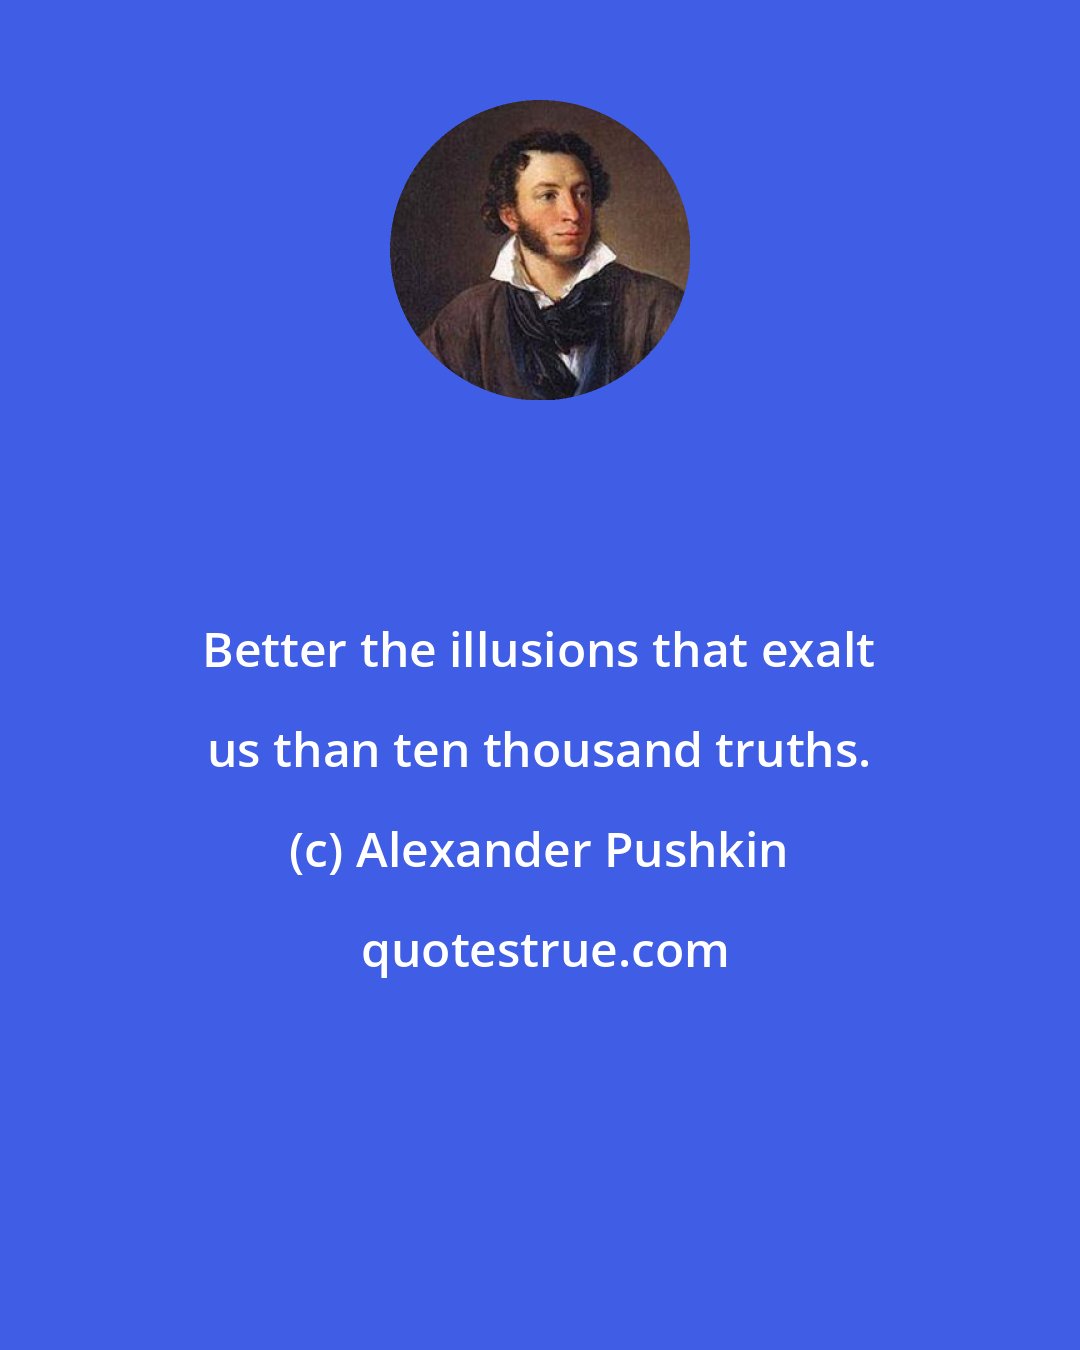 Alexander Pushkin: Better the illusions that exalt us than ten thousand truths.